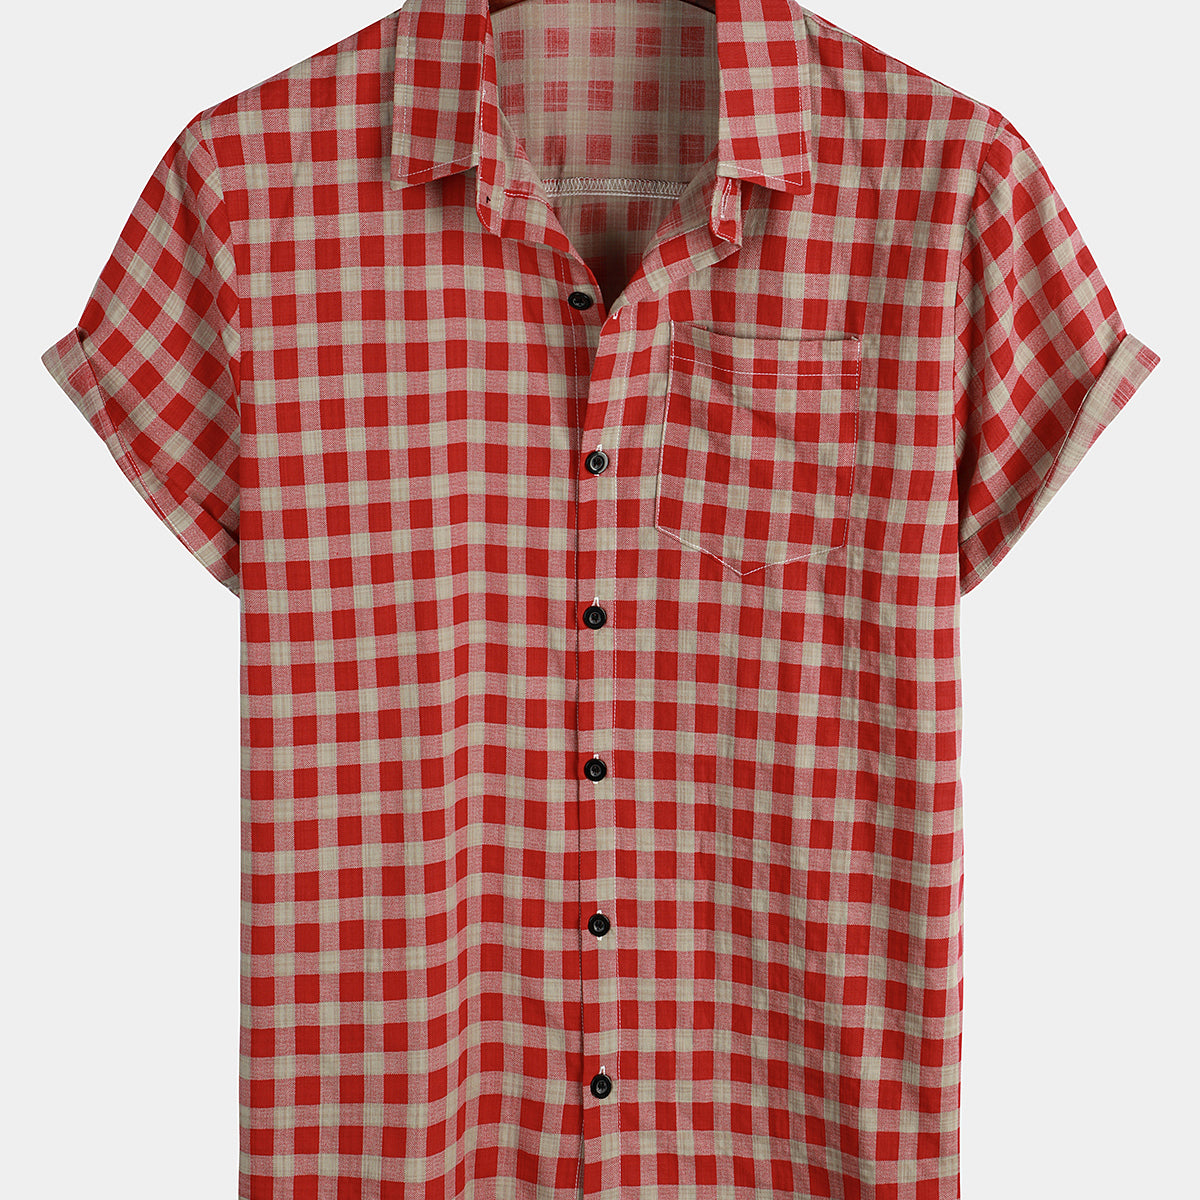 Men's Red Check Print Plaid Pocket Button Up Short Sleeve Shirt